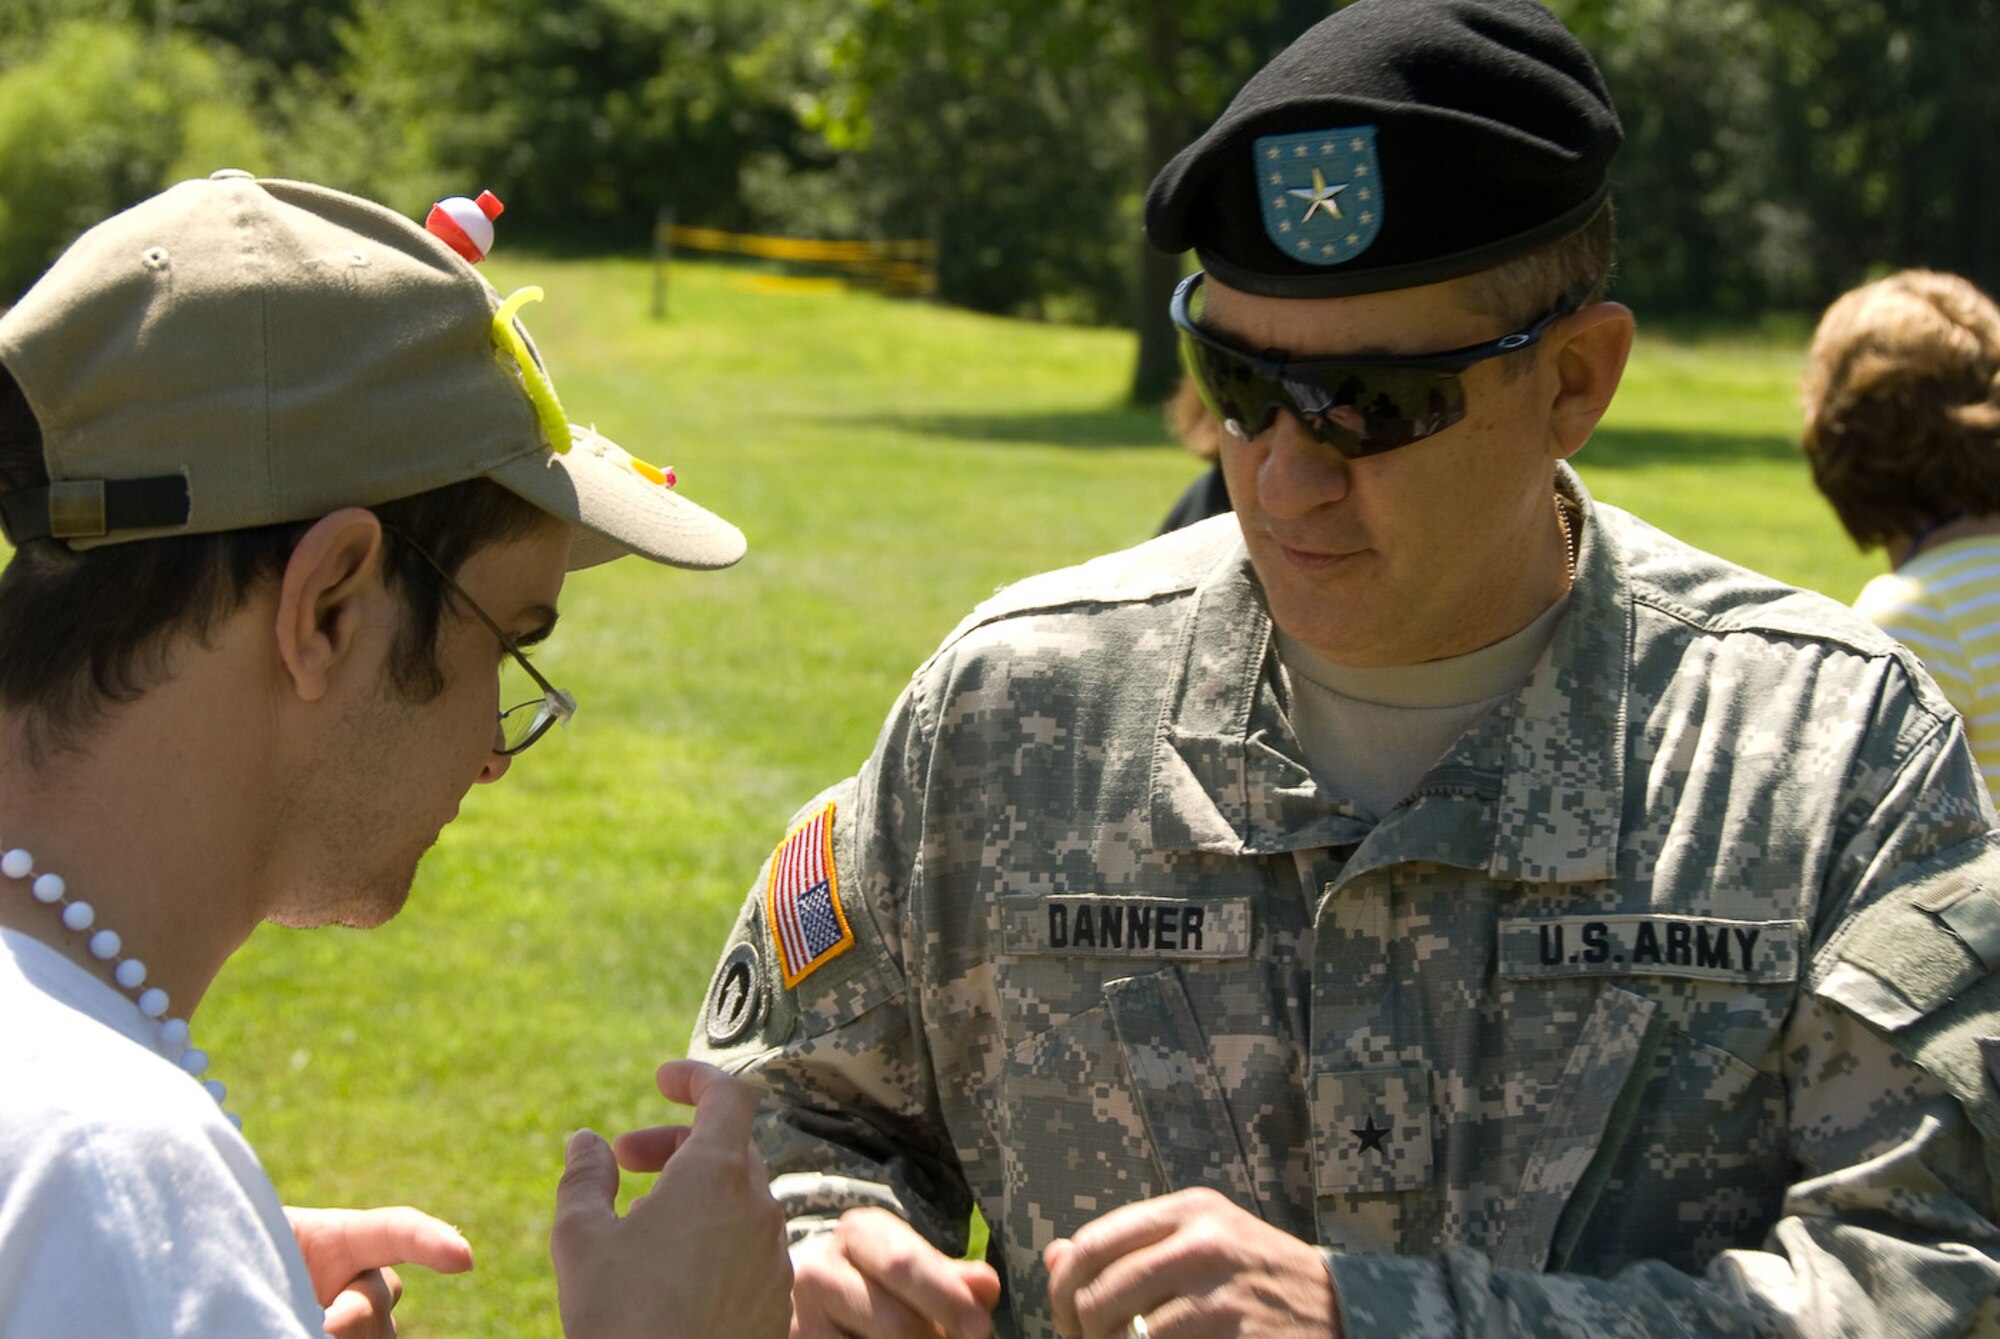 Brig. General Stephen Danner, Missouri Adjutant General, visits with campers at Camp Guardian during the 2009 session.